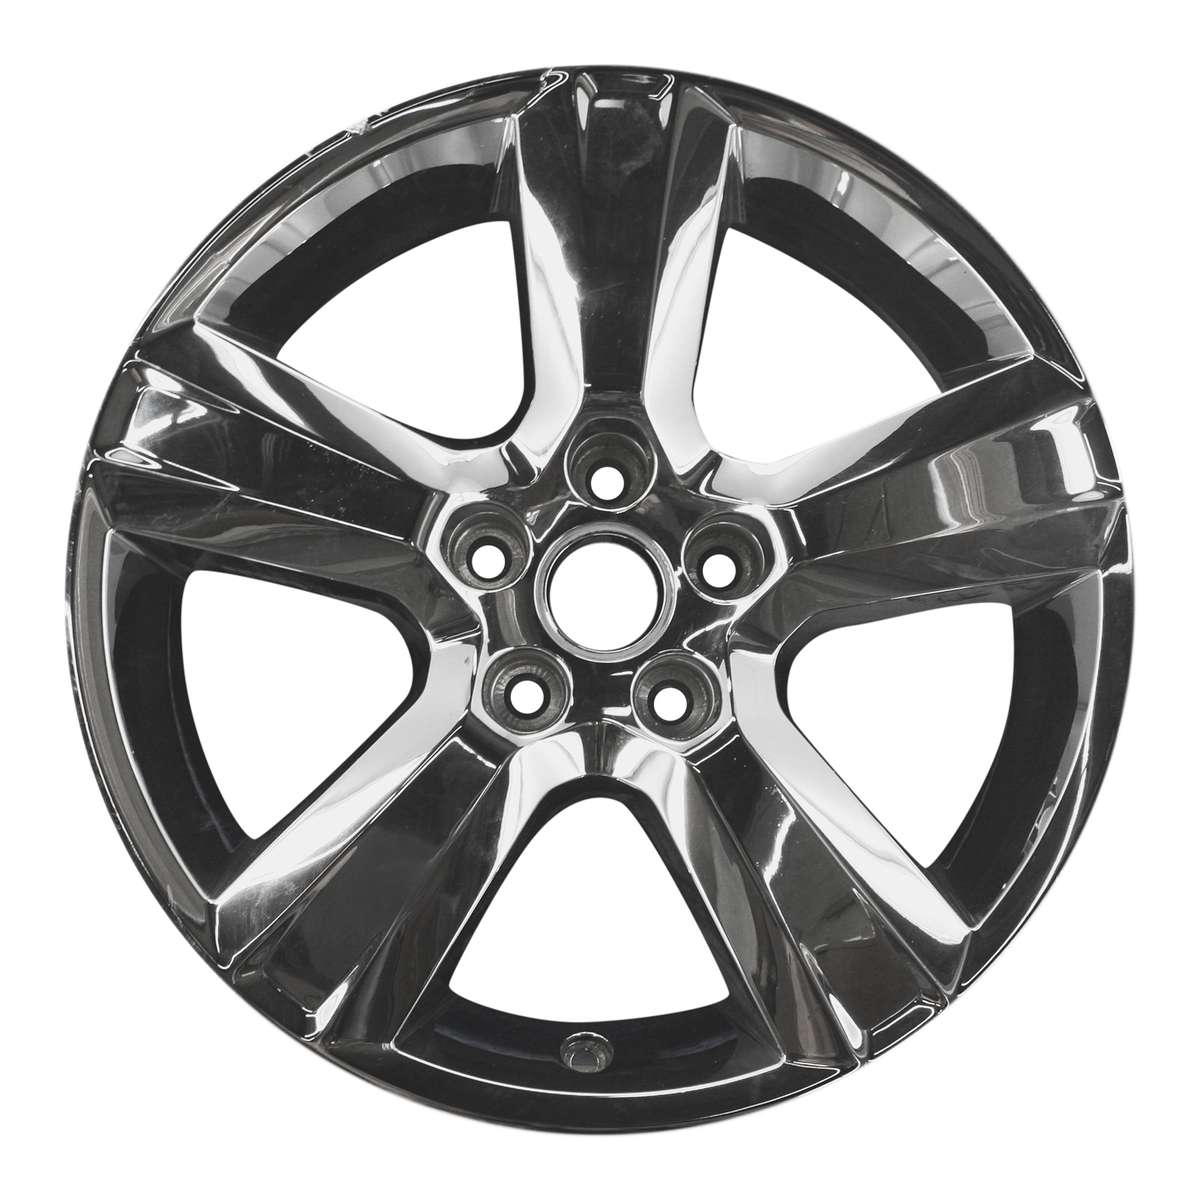 2011 Chevrolet Malibu 17" OEM Wheel Rim W5436CHR